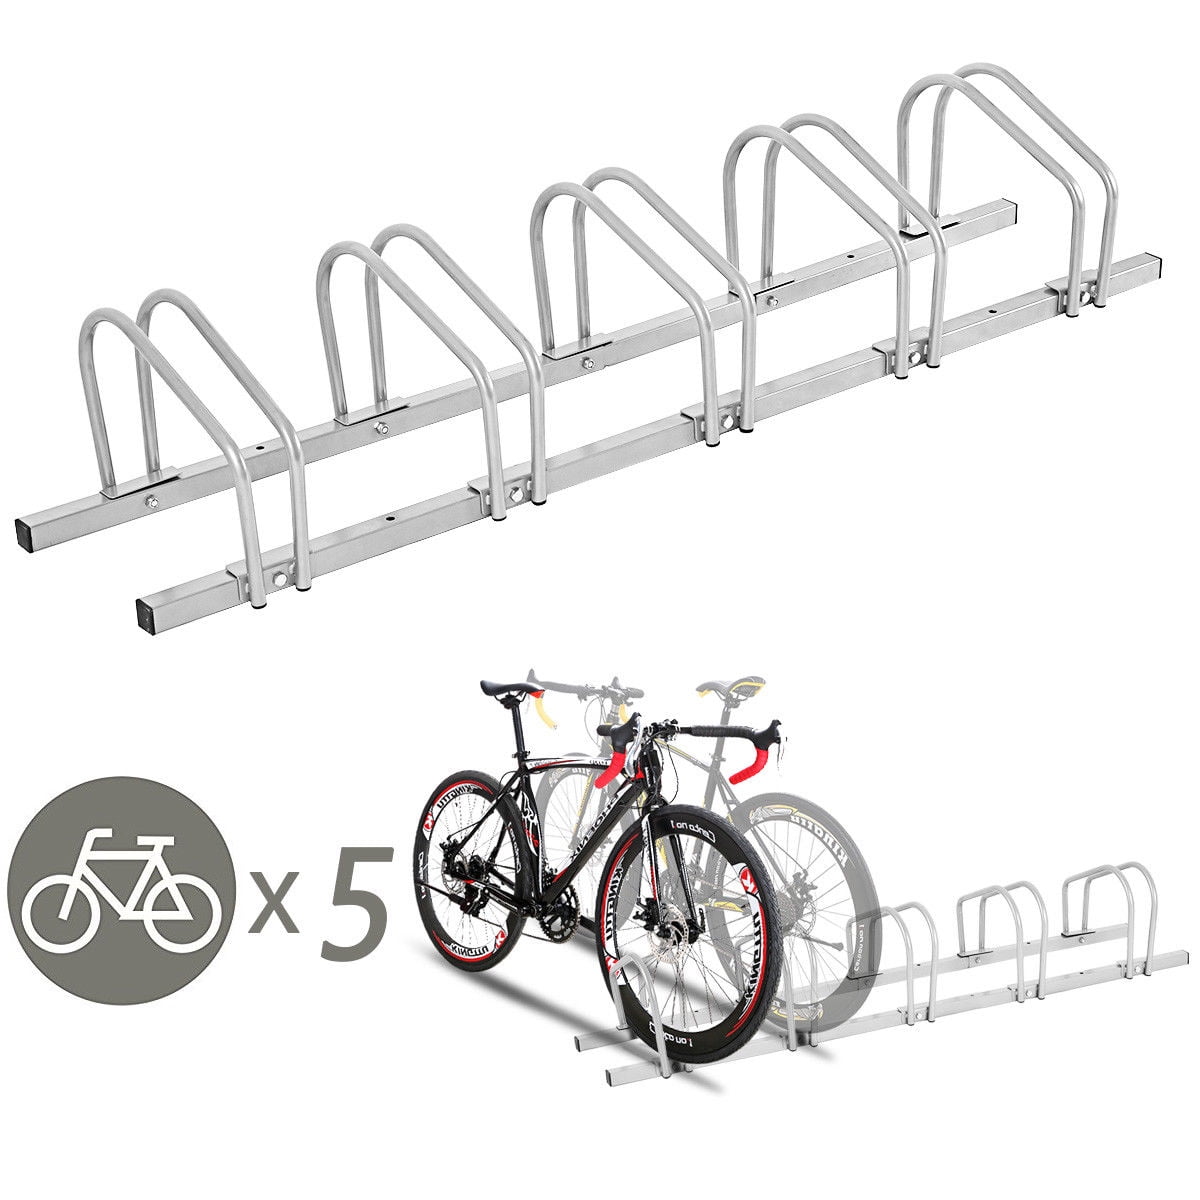 Gymax 5 Bike Bicycle Stand Parking Garage Storage Cycling Rack Silver